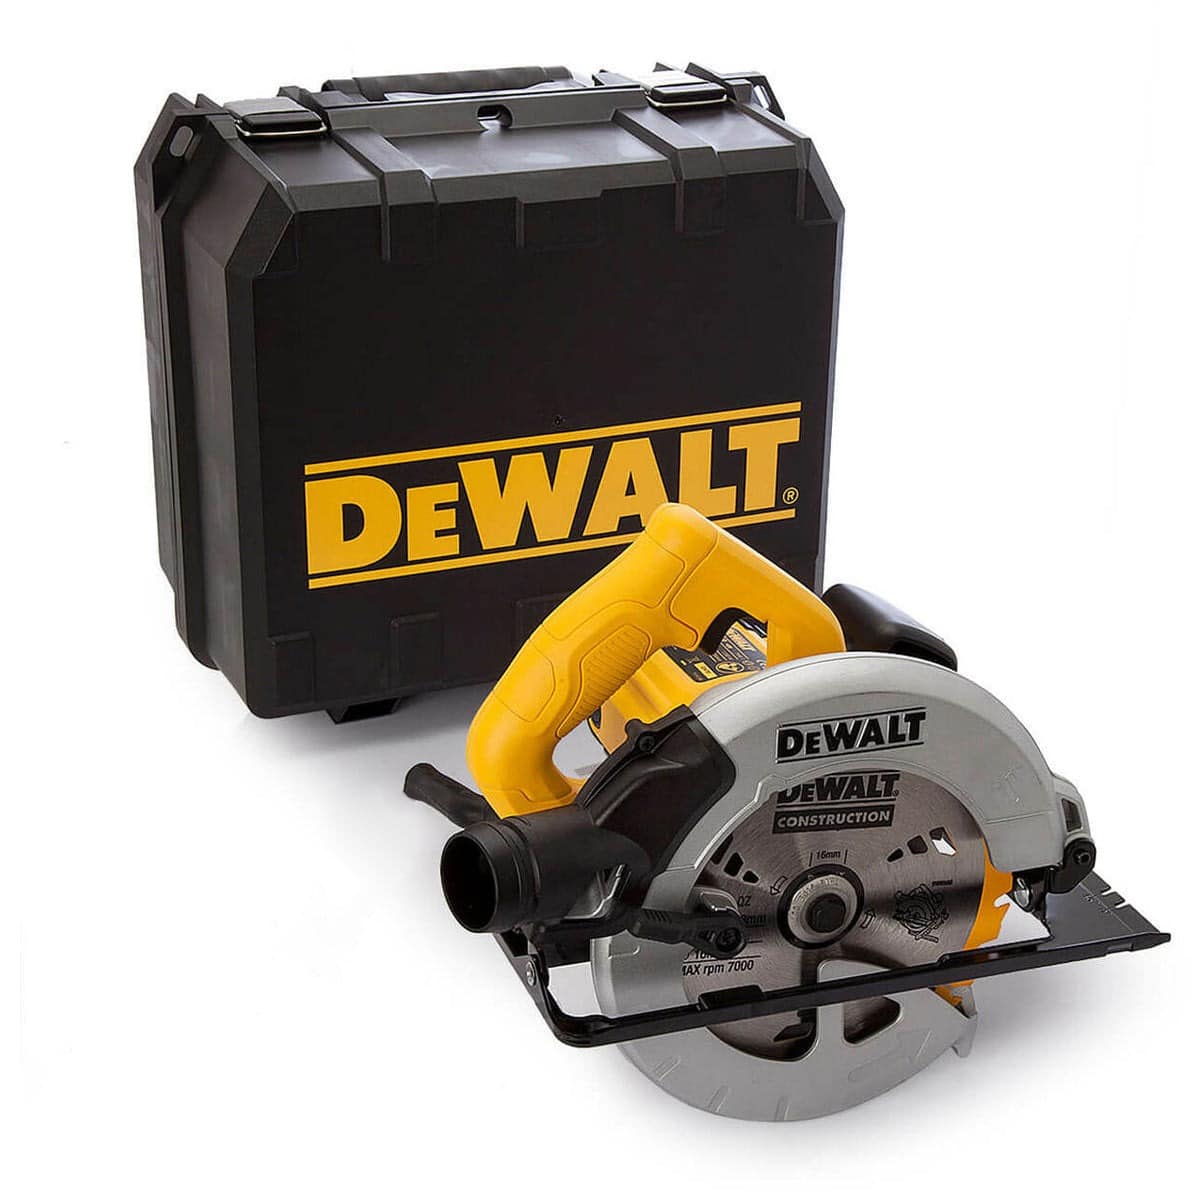 DEWALT DWE560K 184mm Compact Circular Saw & Kitbox 1350 Watt 240 Volt